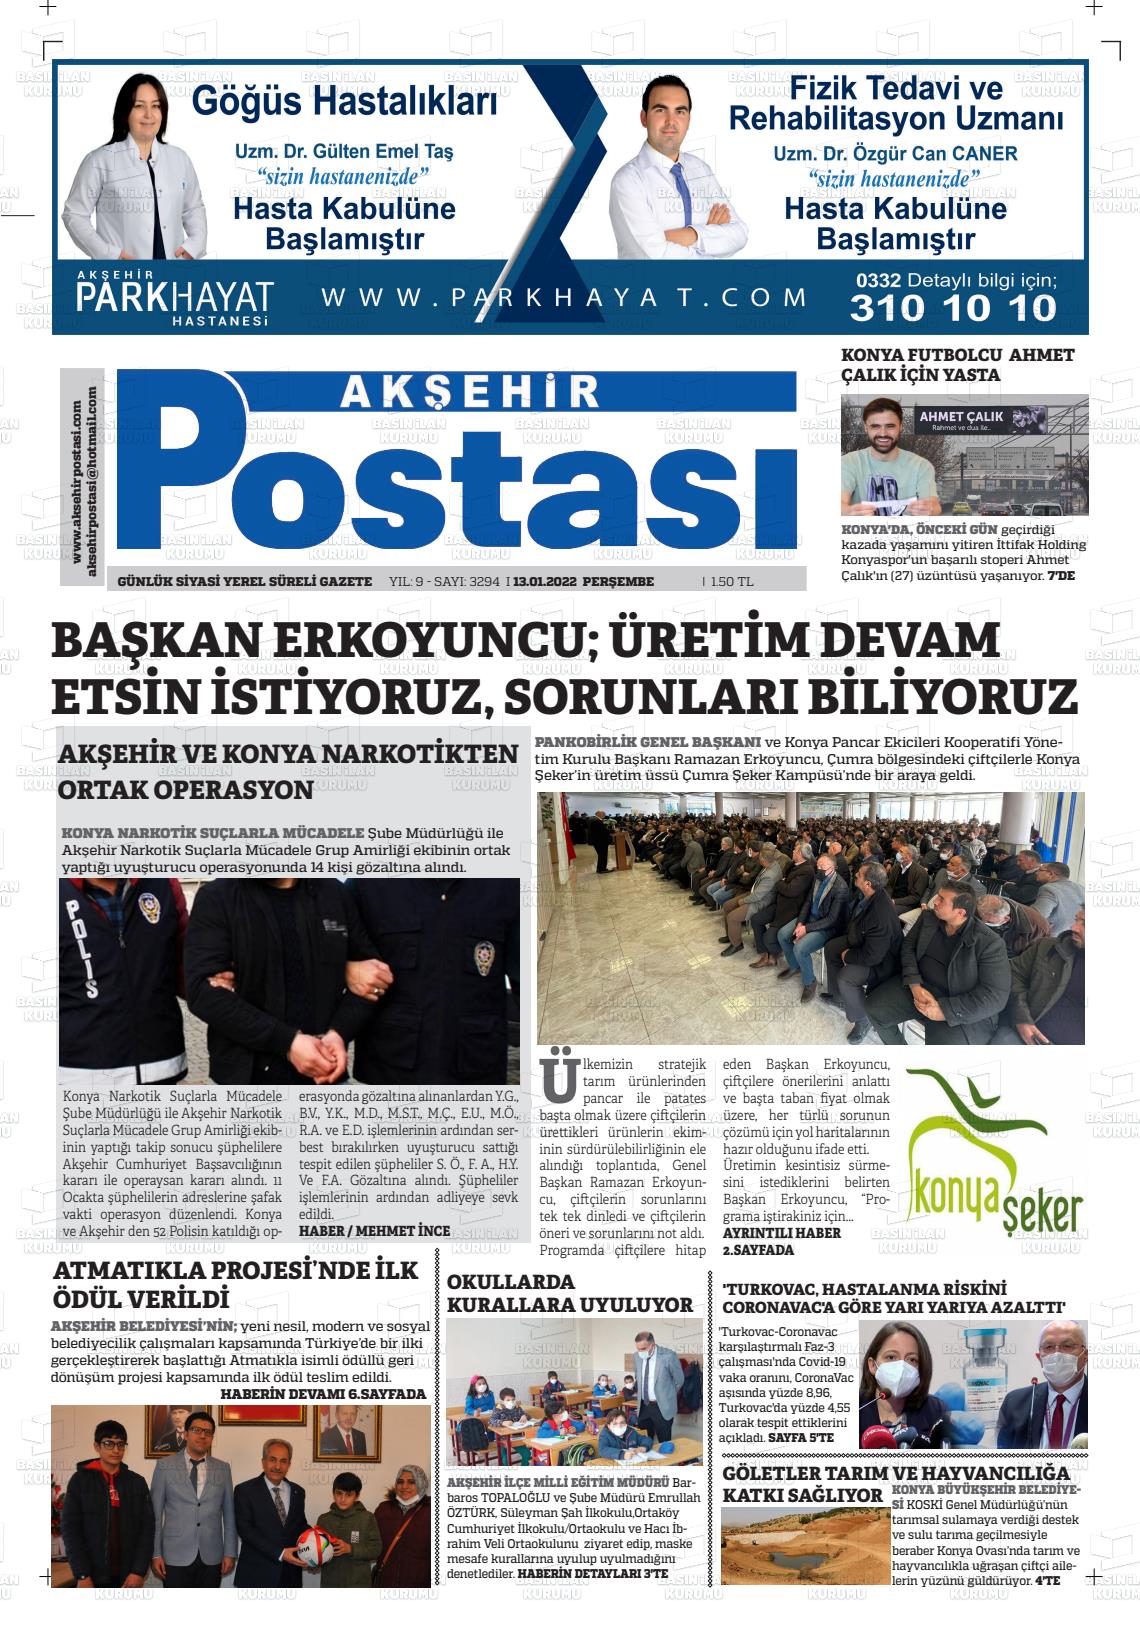 13 Ocak 2022 Akşehir Postasi Gazete Manşeti